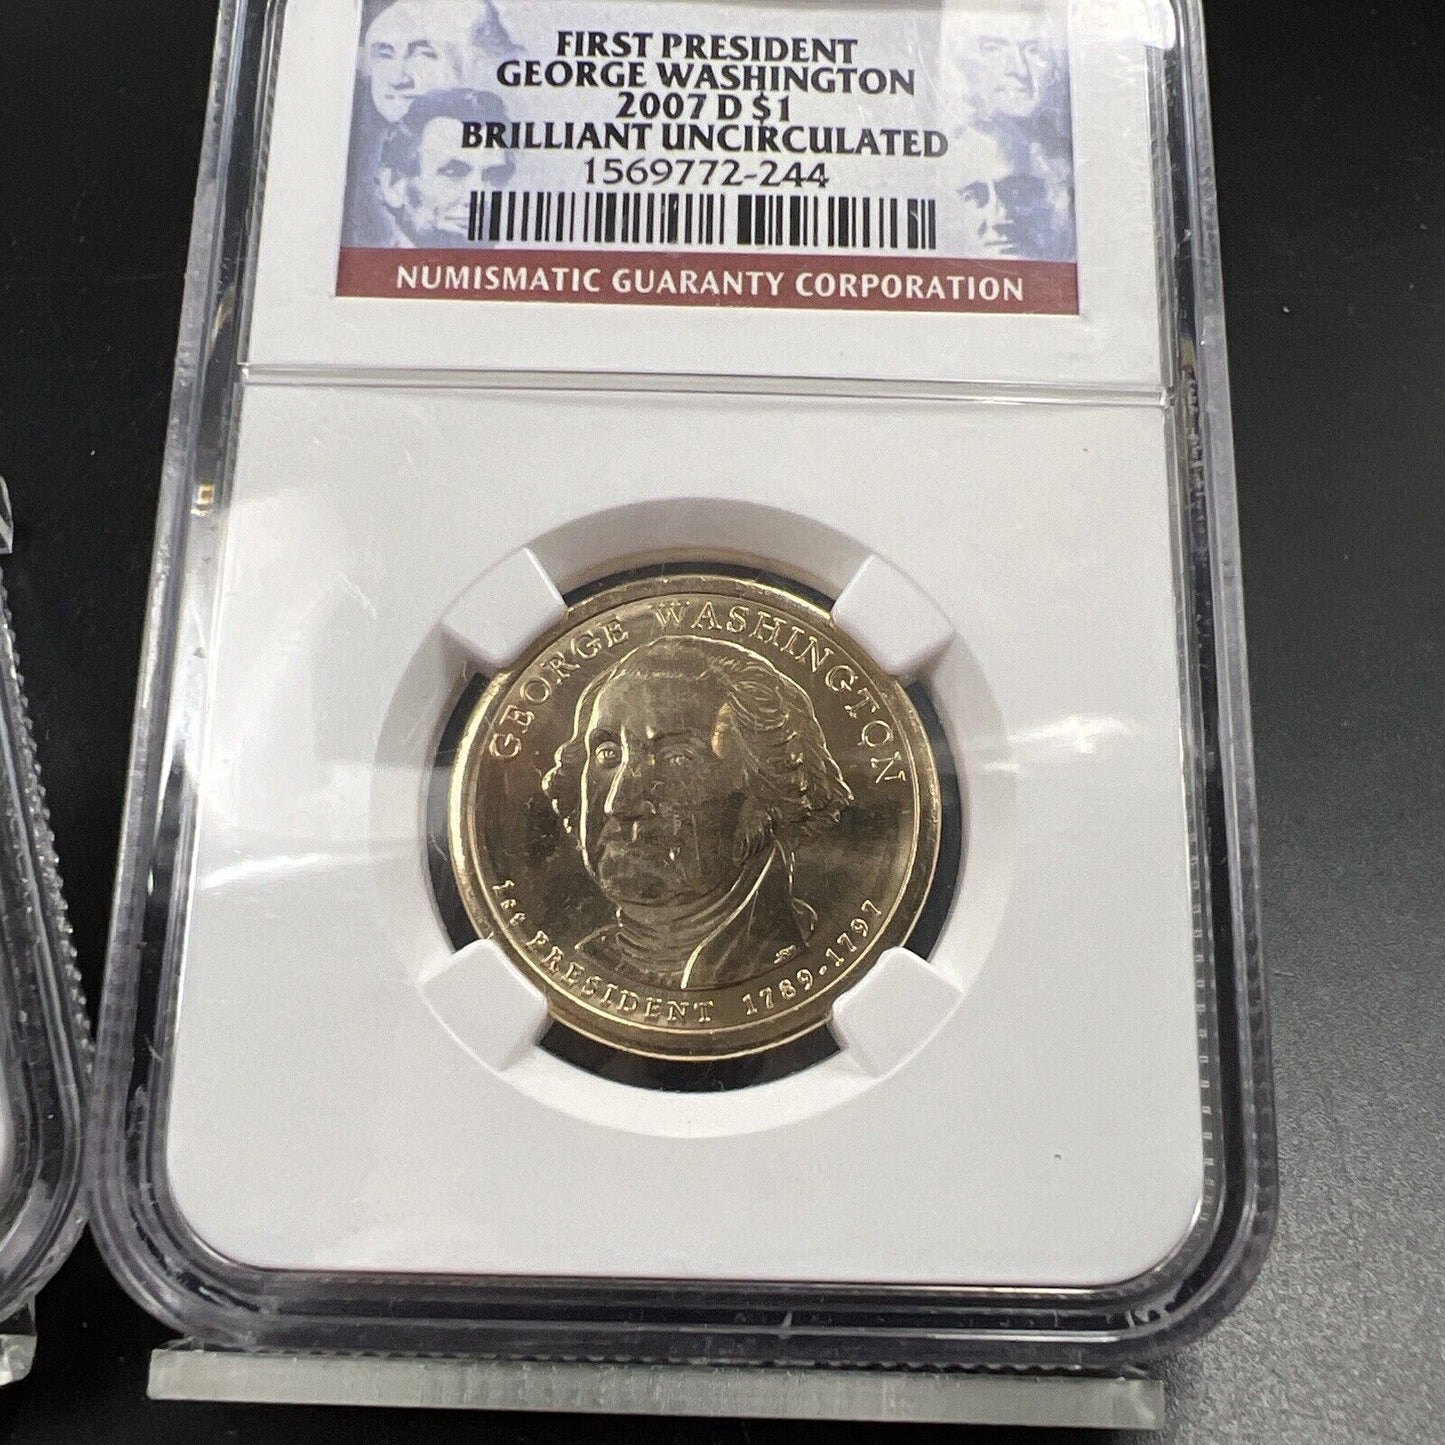 2007 P & D $1 George Washington Presidential Dollar Two Coin Set NGC BU Certifie